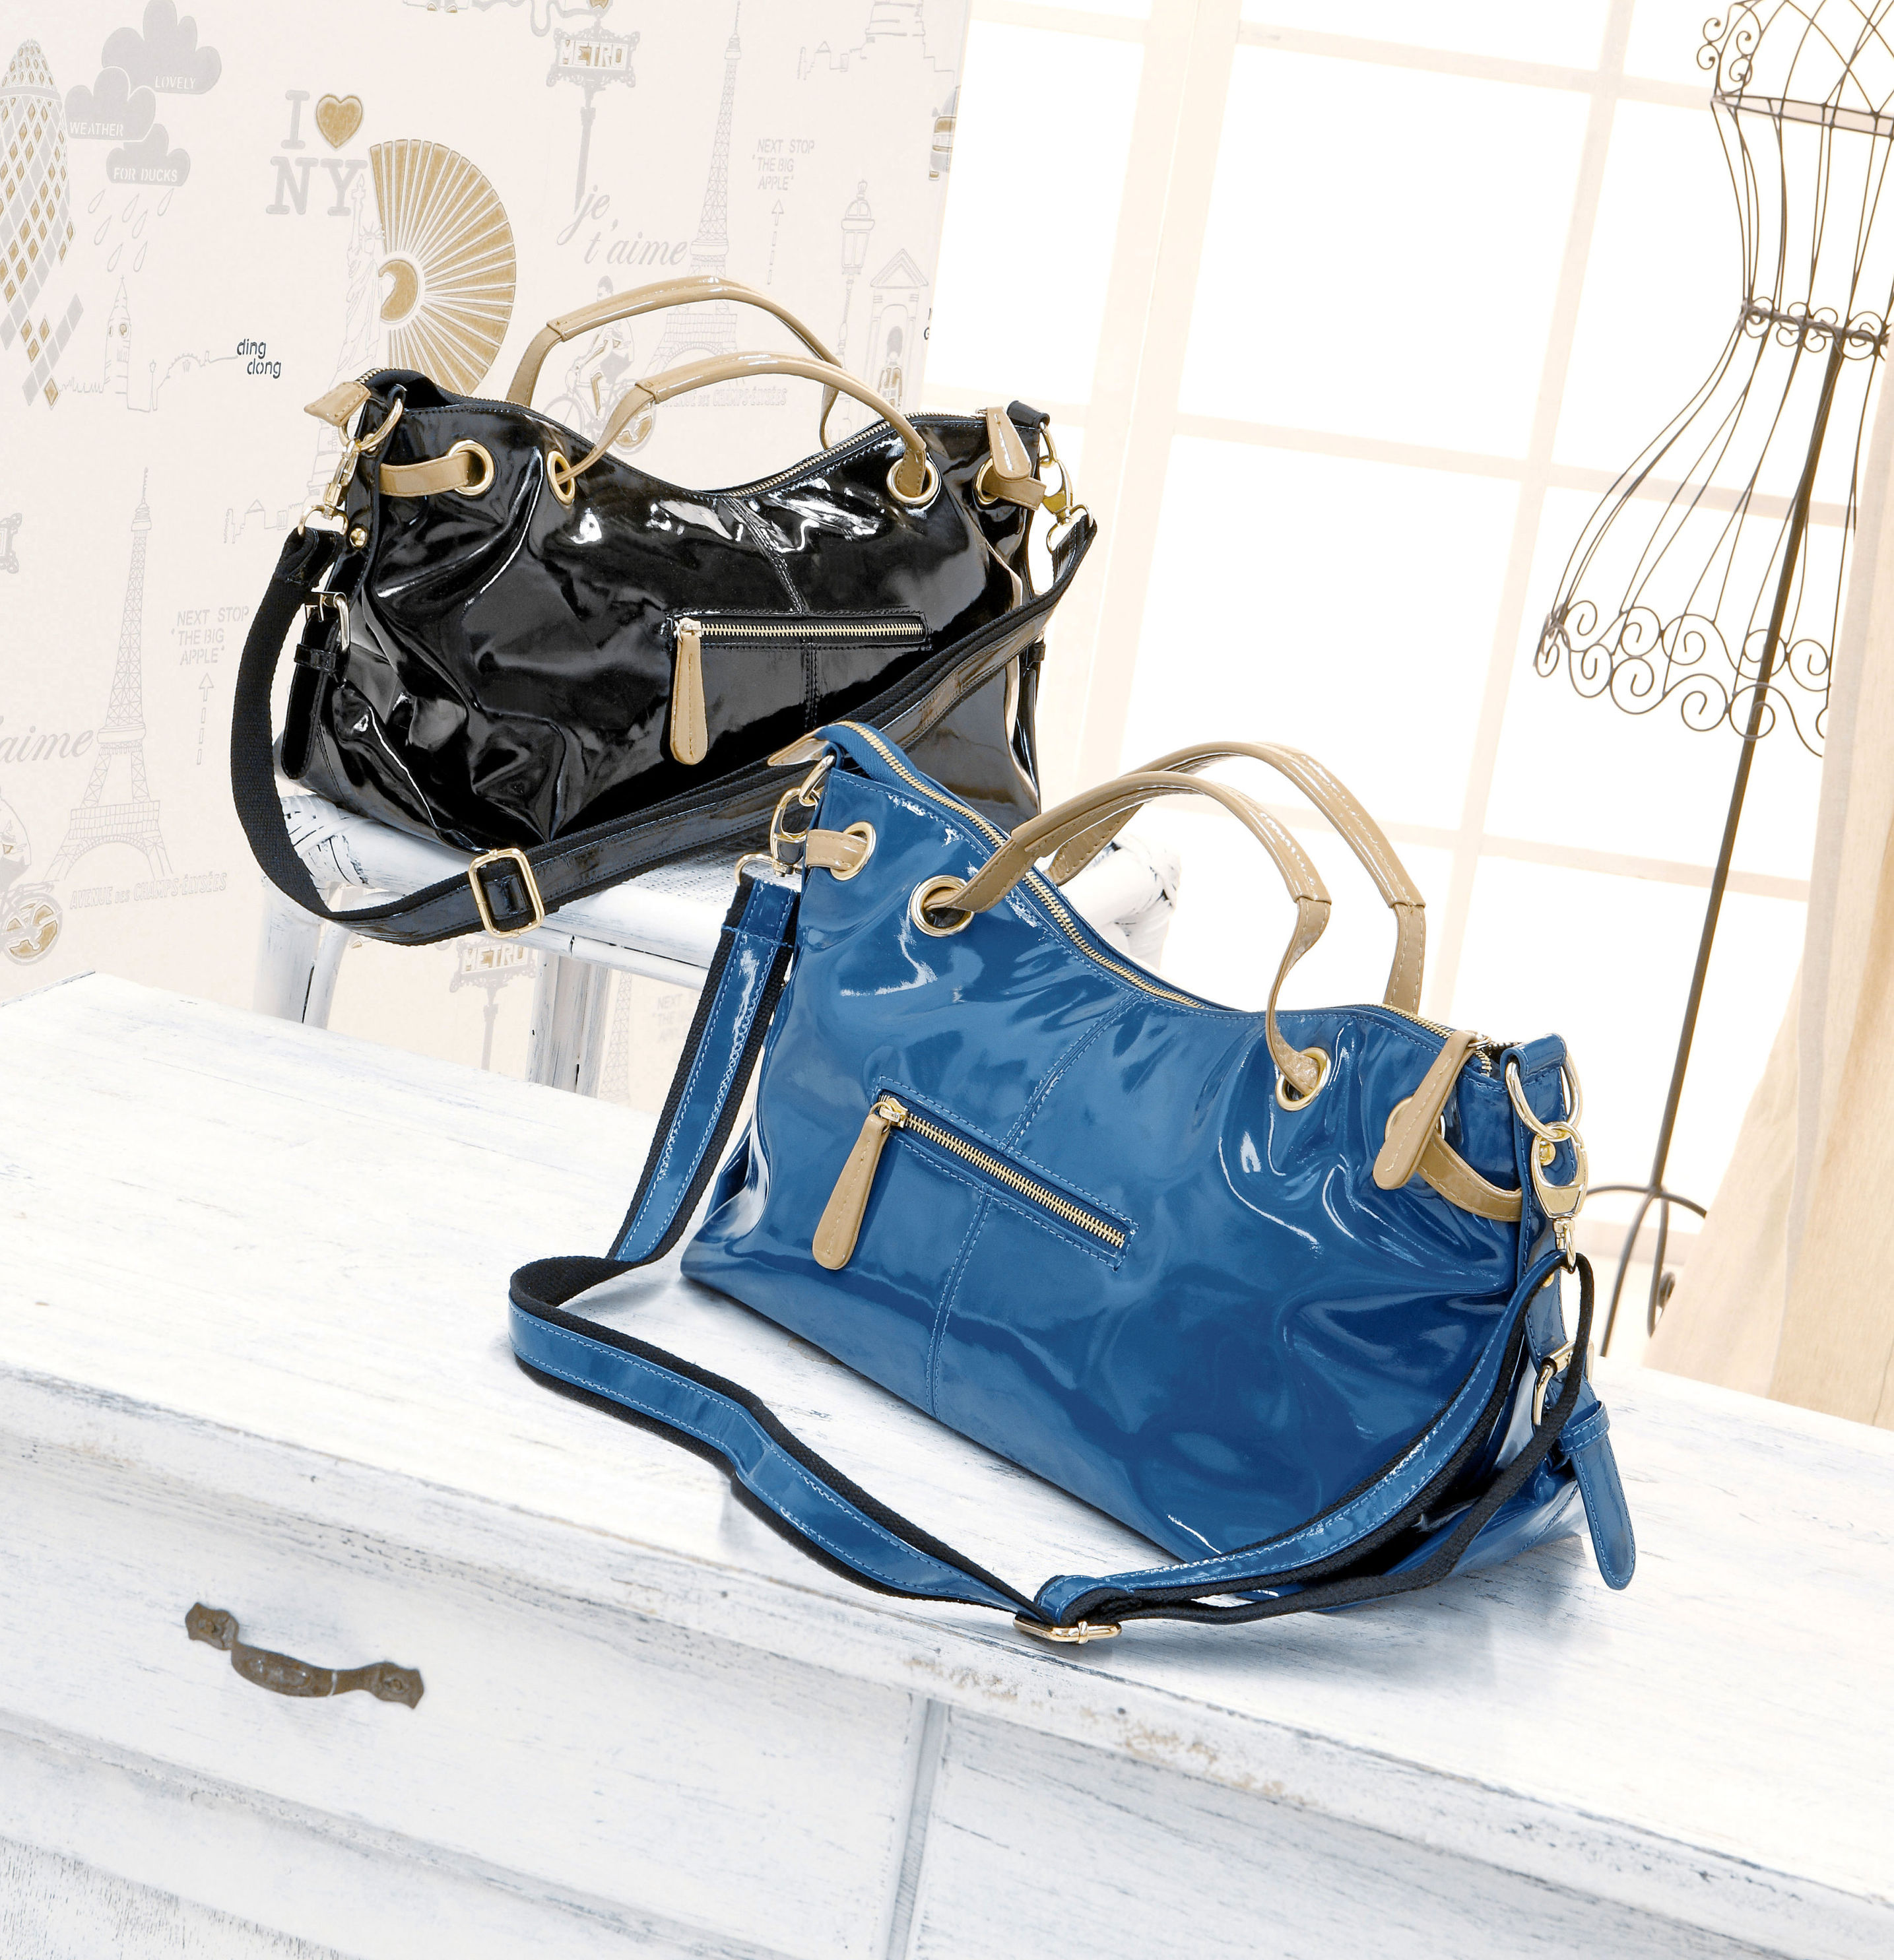 MAS[QUE]NADA Damen-Handtasche Paris, Lack-Synthetik Farbe: blau |  Weltbild.de